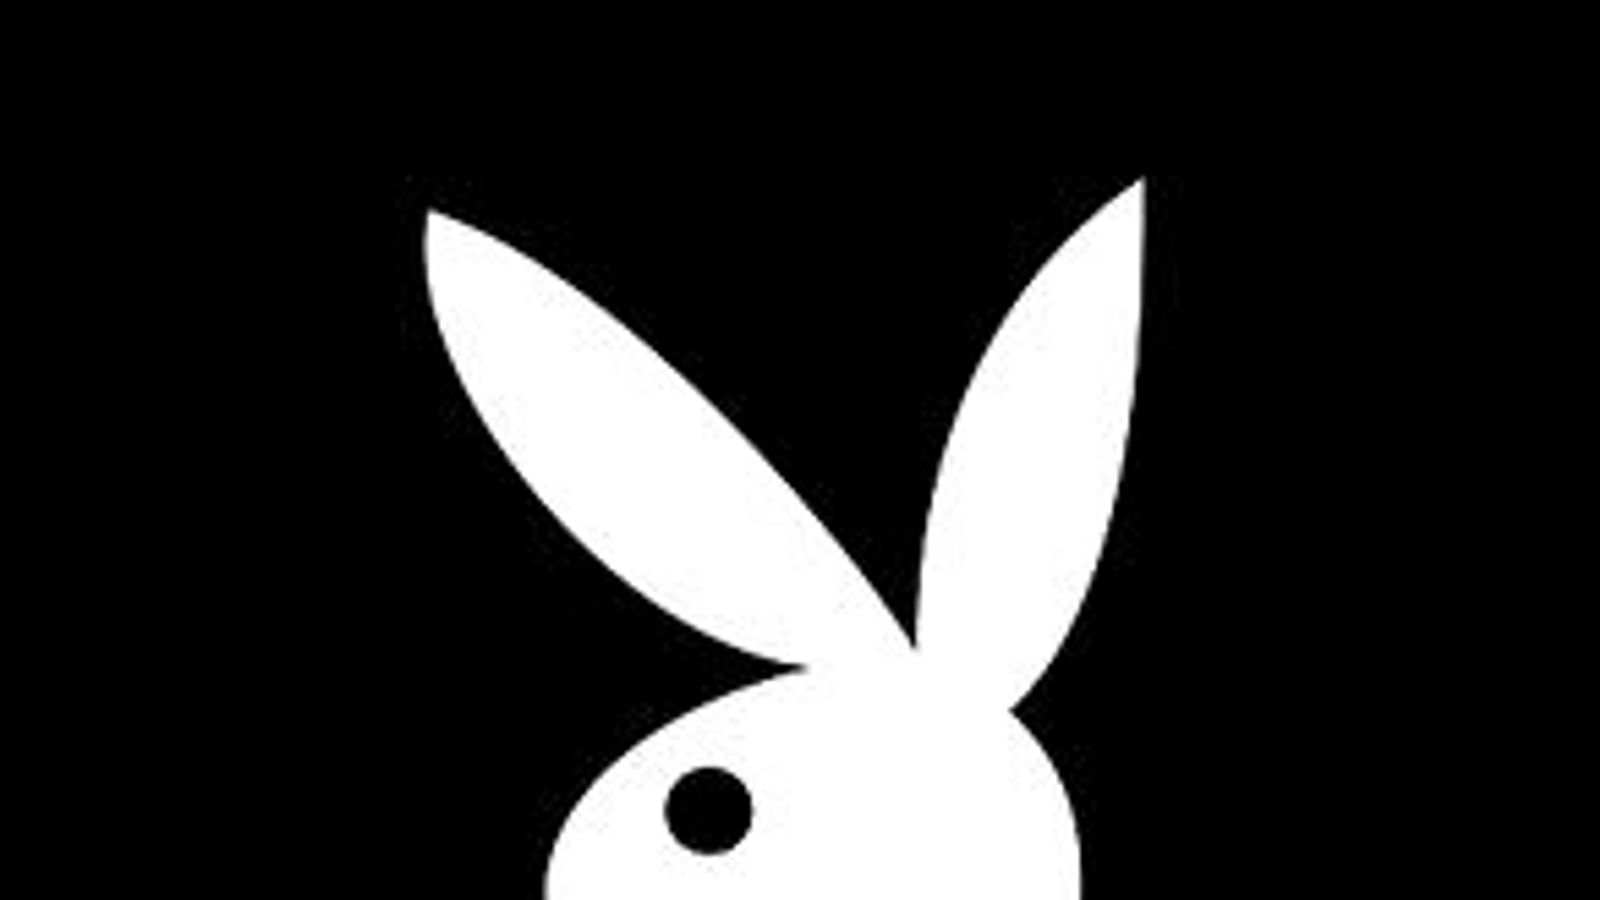 Playboy bunny logo designer Art Paul dies aged 93 | UK News | Sky News